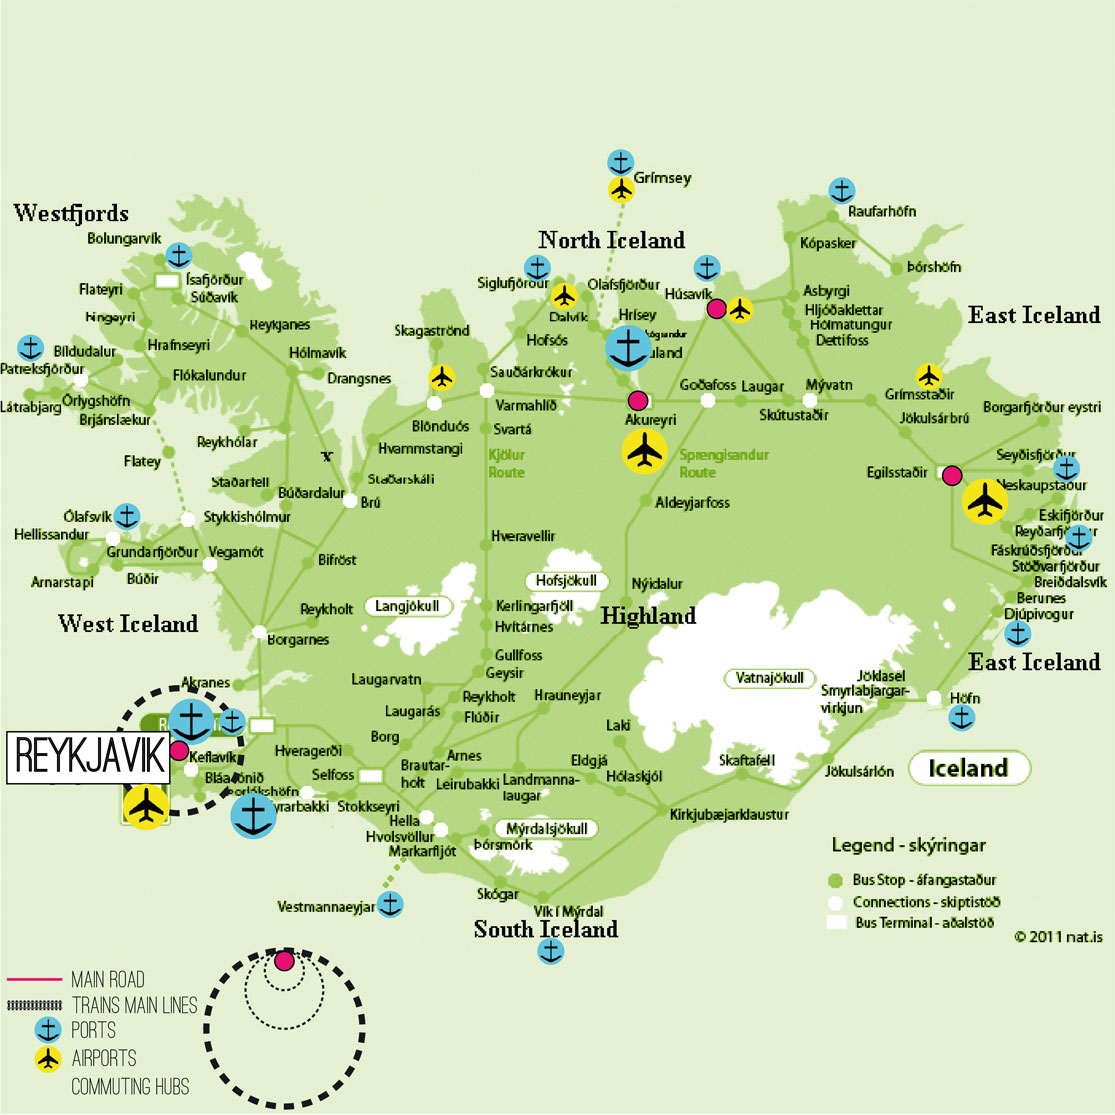 Iceland Case Study - Map